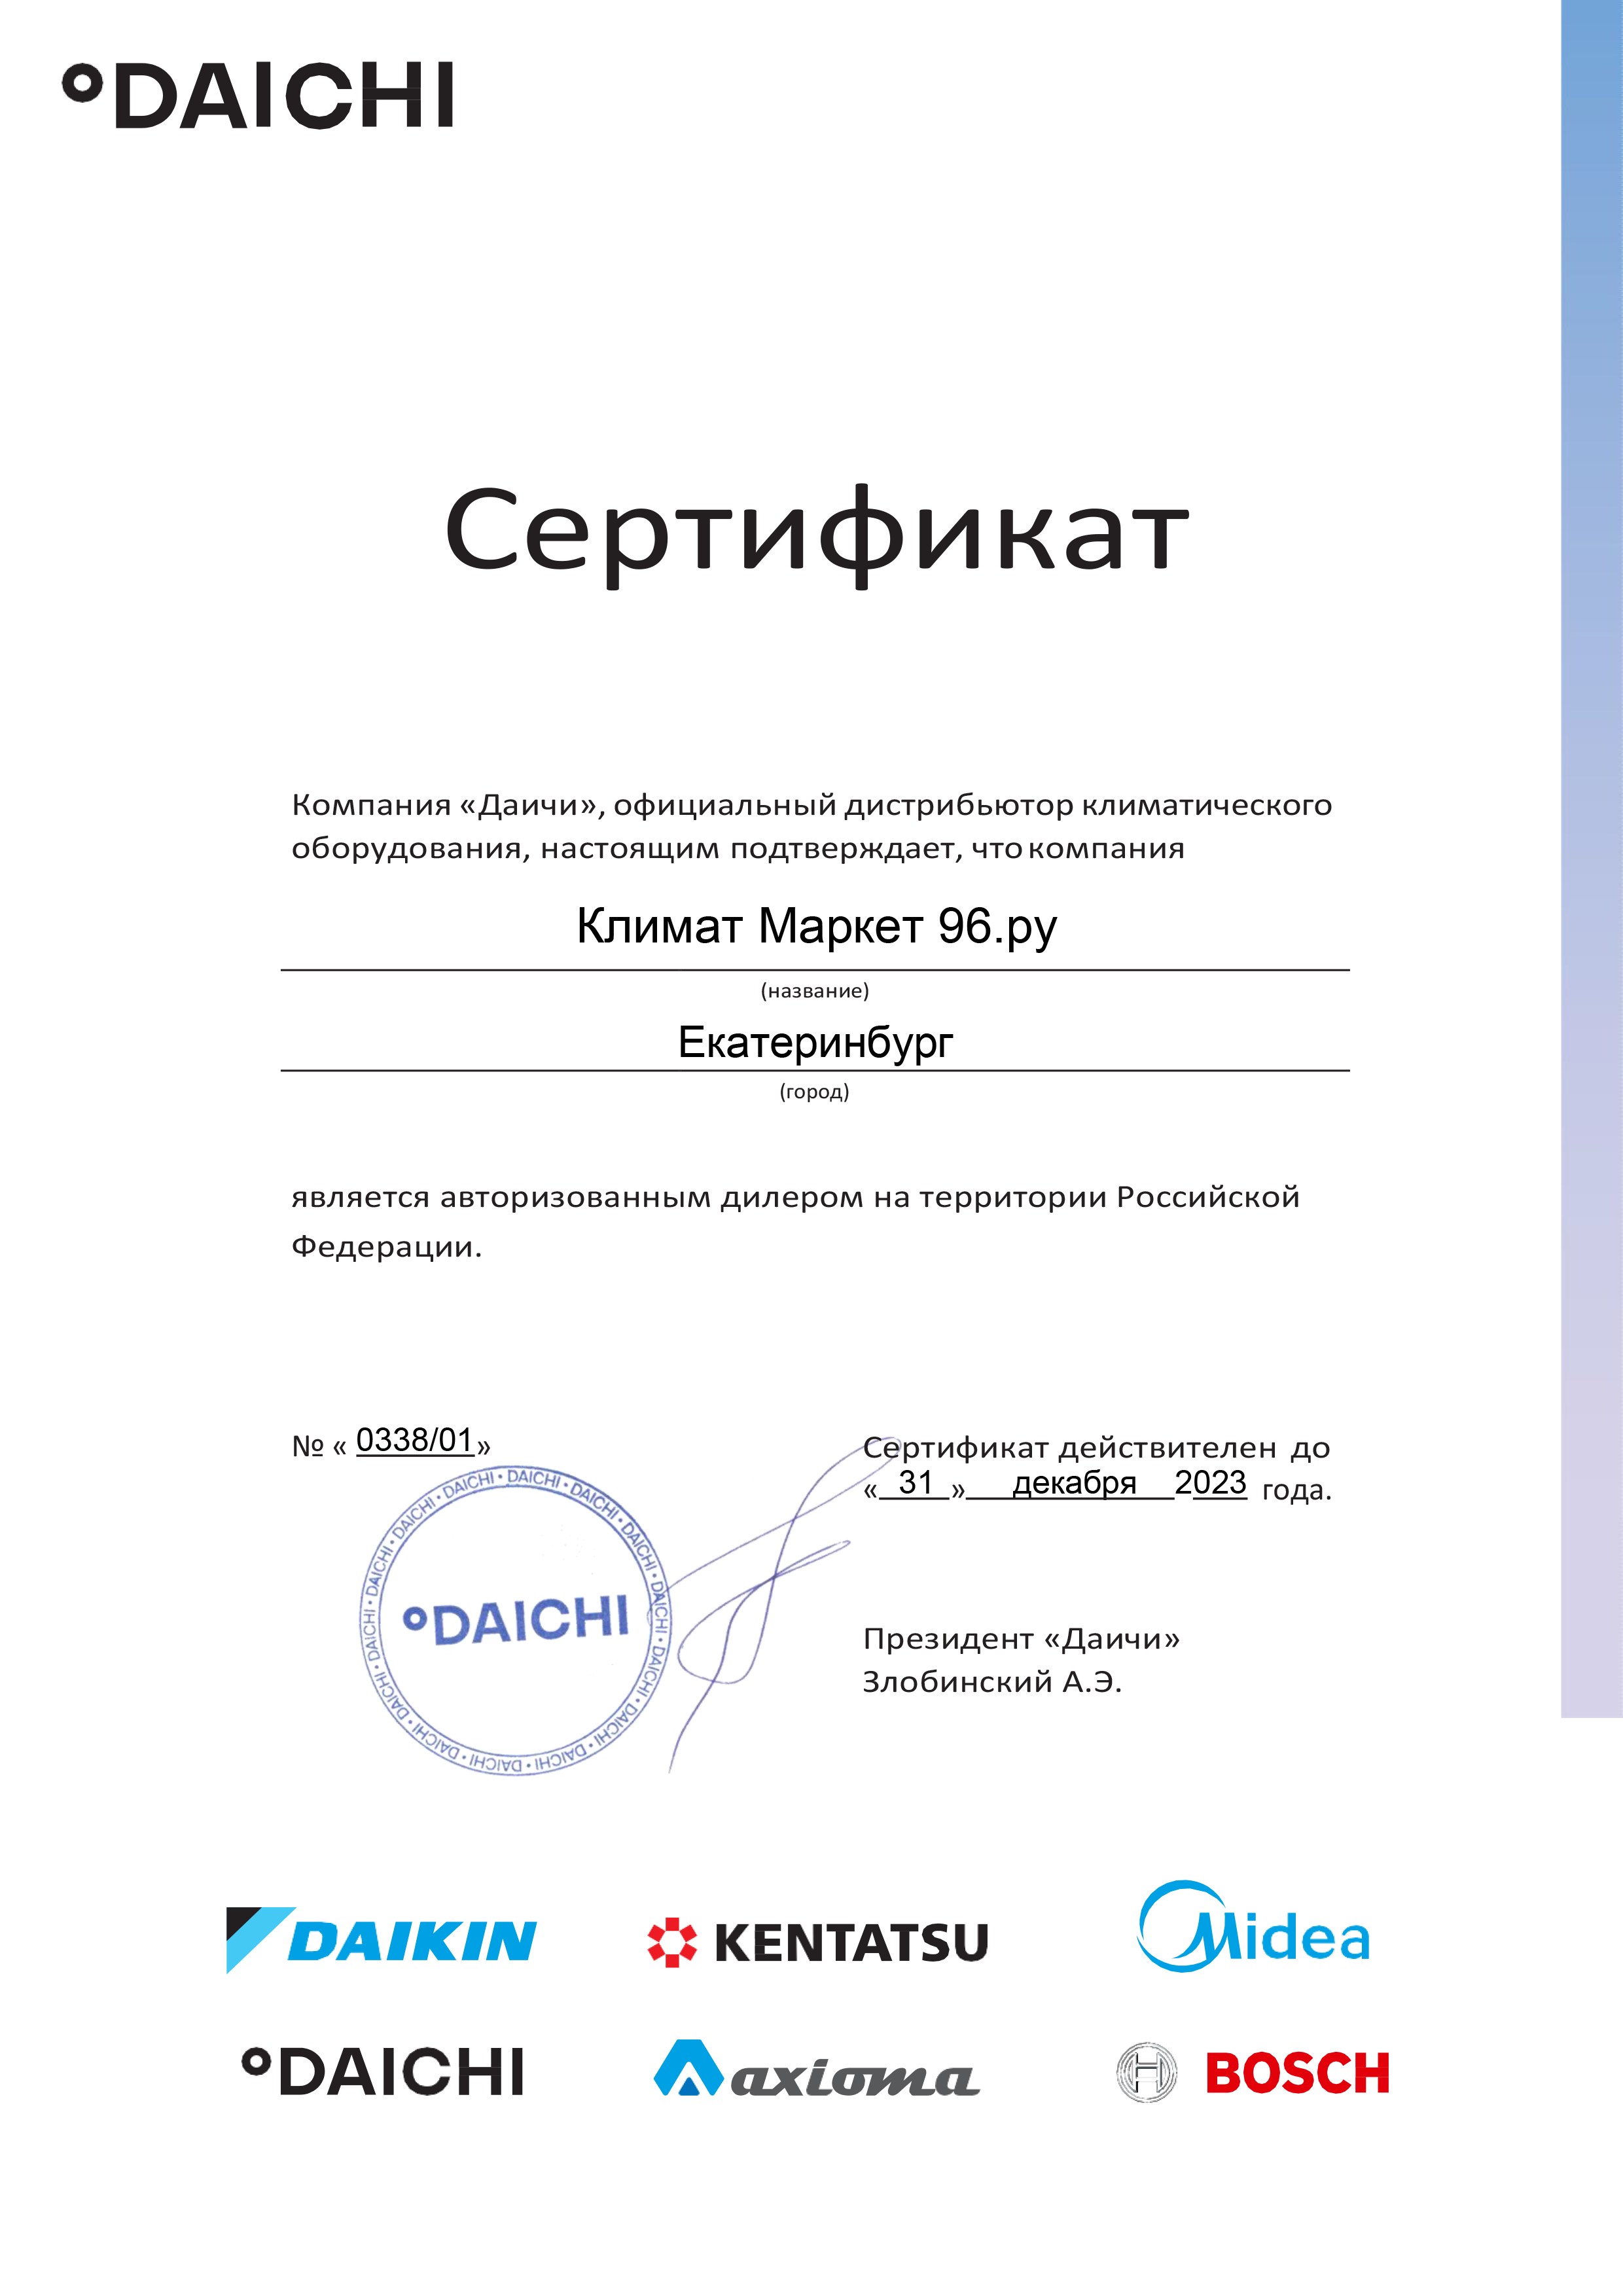 daichi-km96 Kondicioner Daichi AIR35AVQ1/AIR35FV1 kypit v Ekaterinbyrge v internet-magazine KlimatMarket96.ry Сертификат дилера